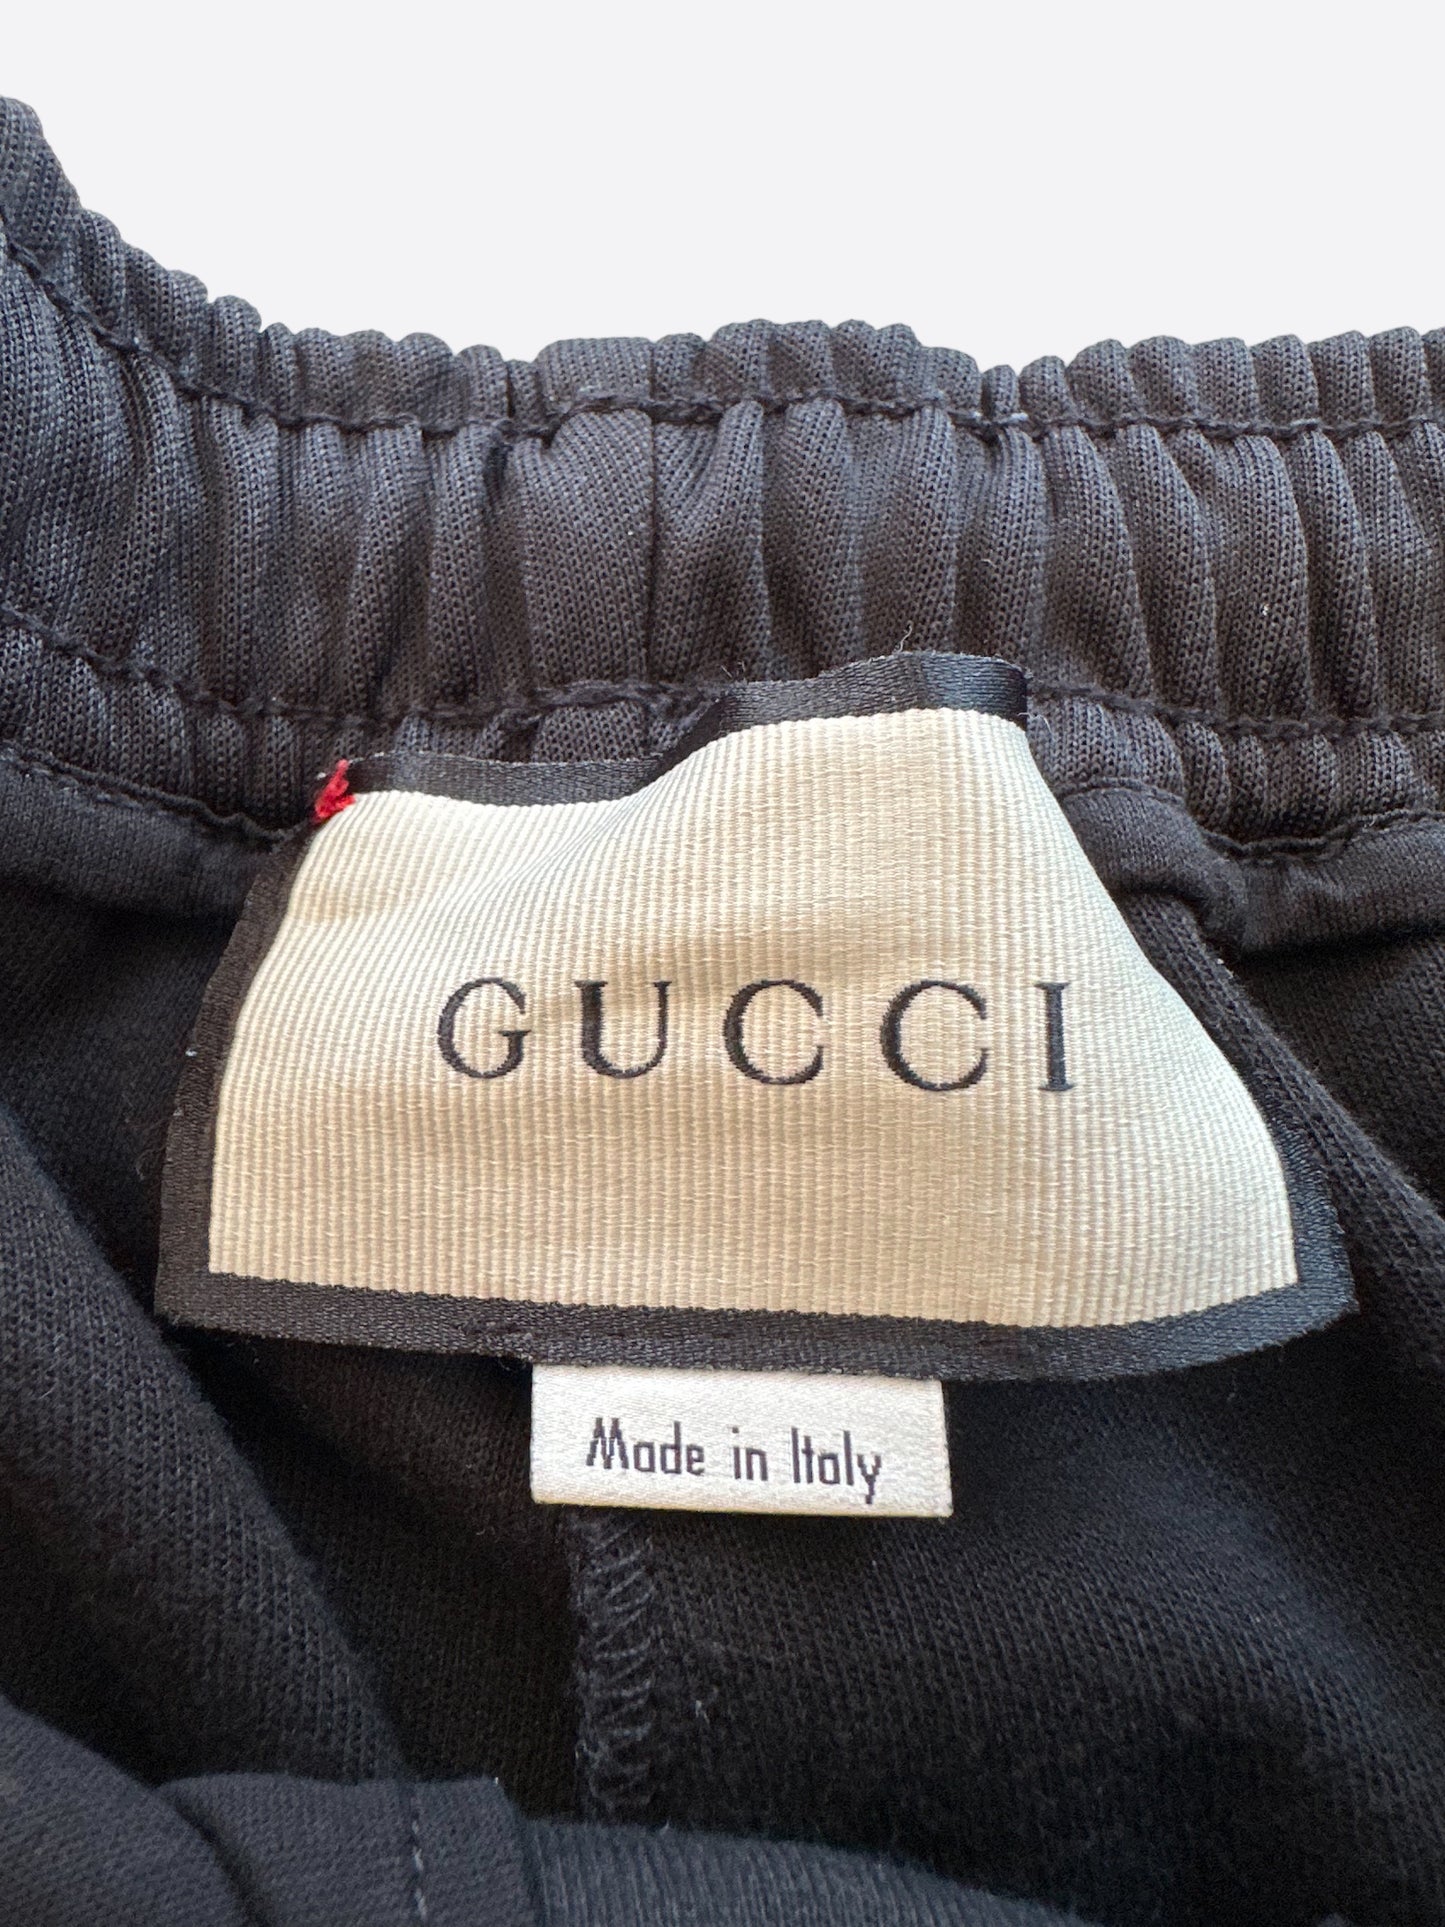 Gucci Black & Tan GG Monogram Striped Shorts